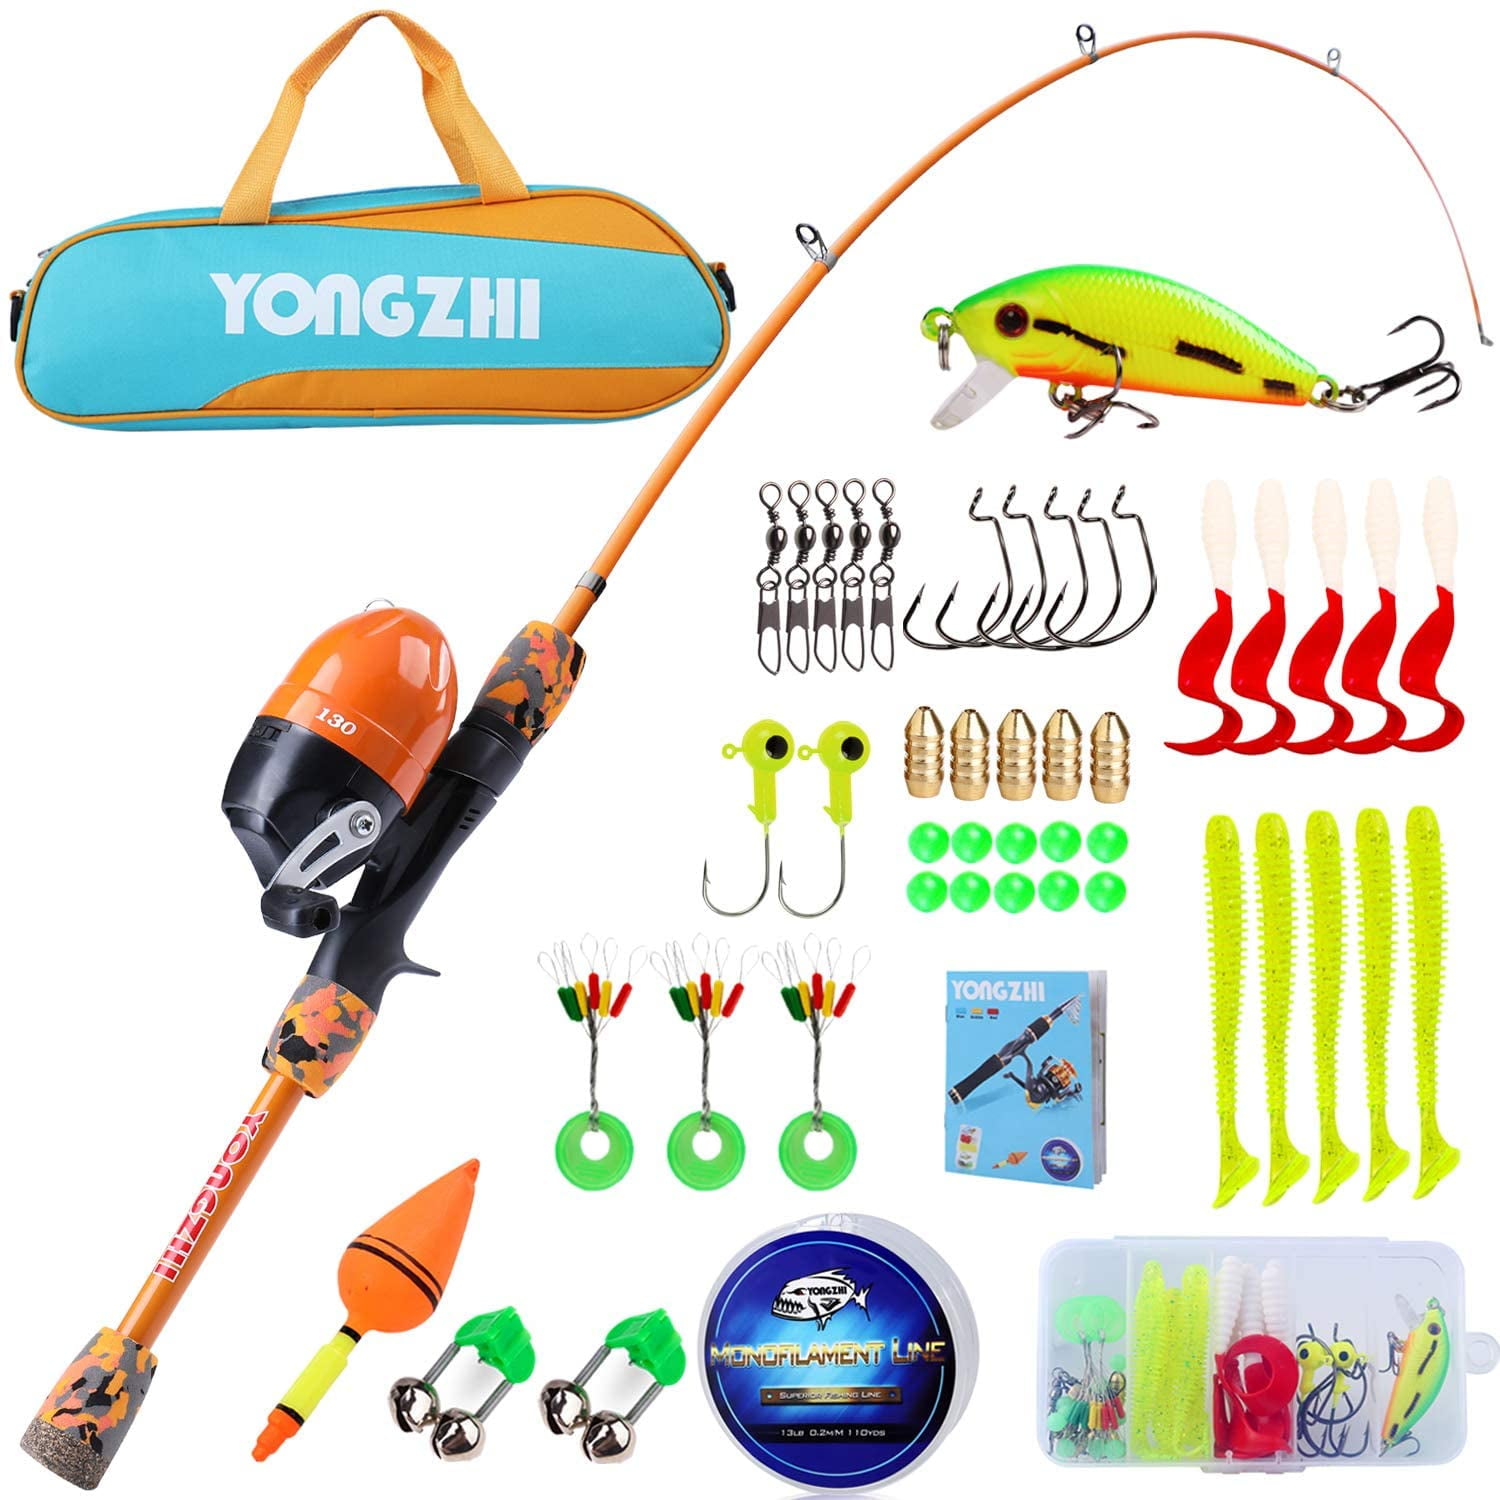 YONGZHI Kids Fishing Pole with Spinning Reels,Telescopic Fishing Rod,Shoulder 